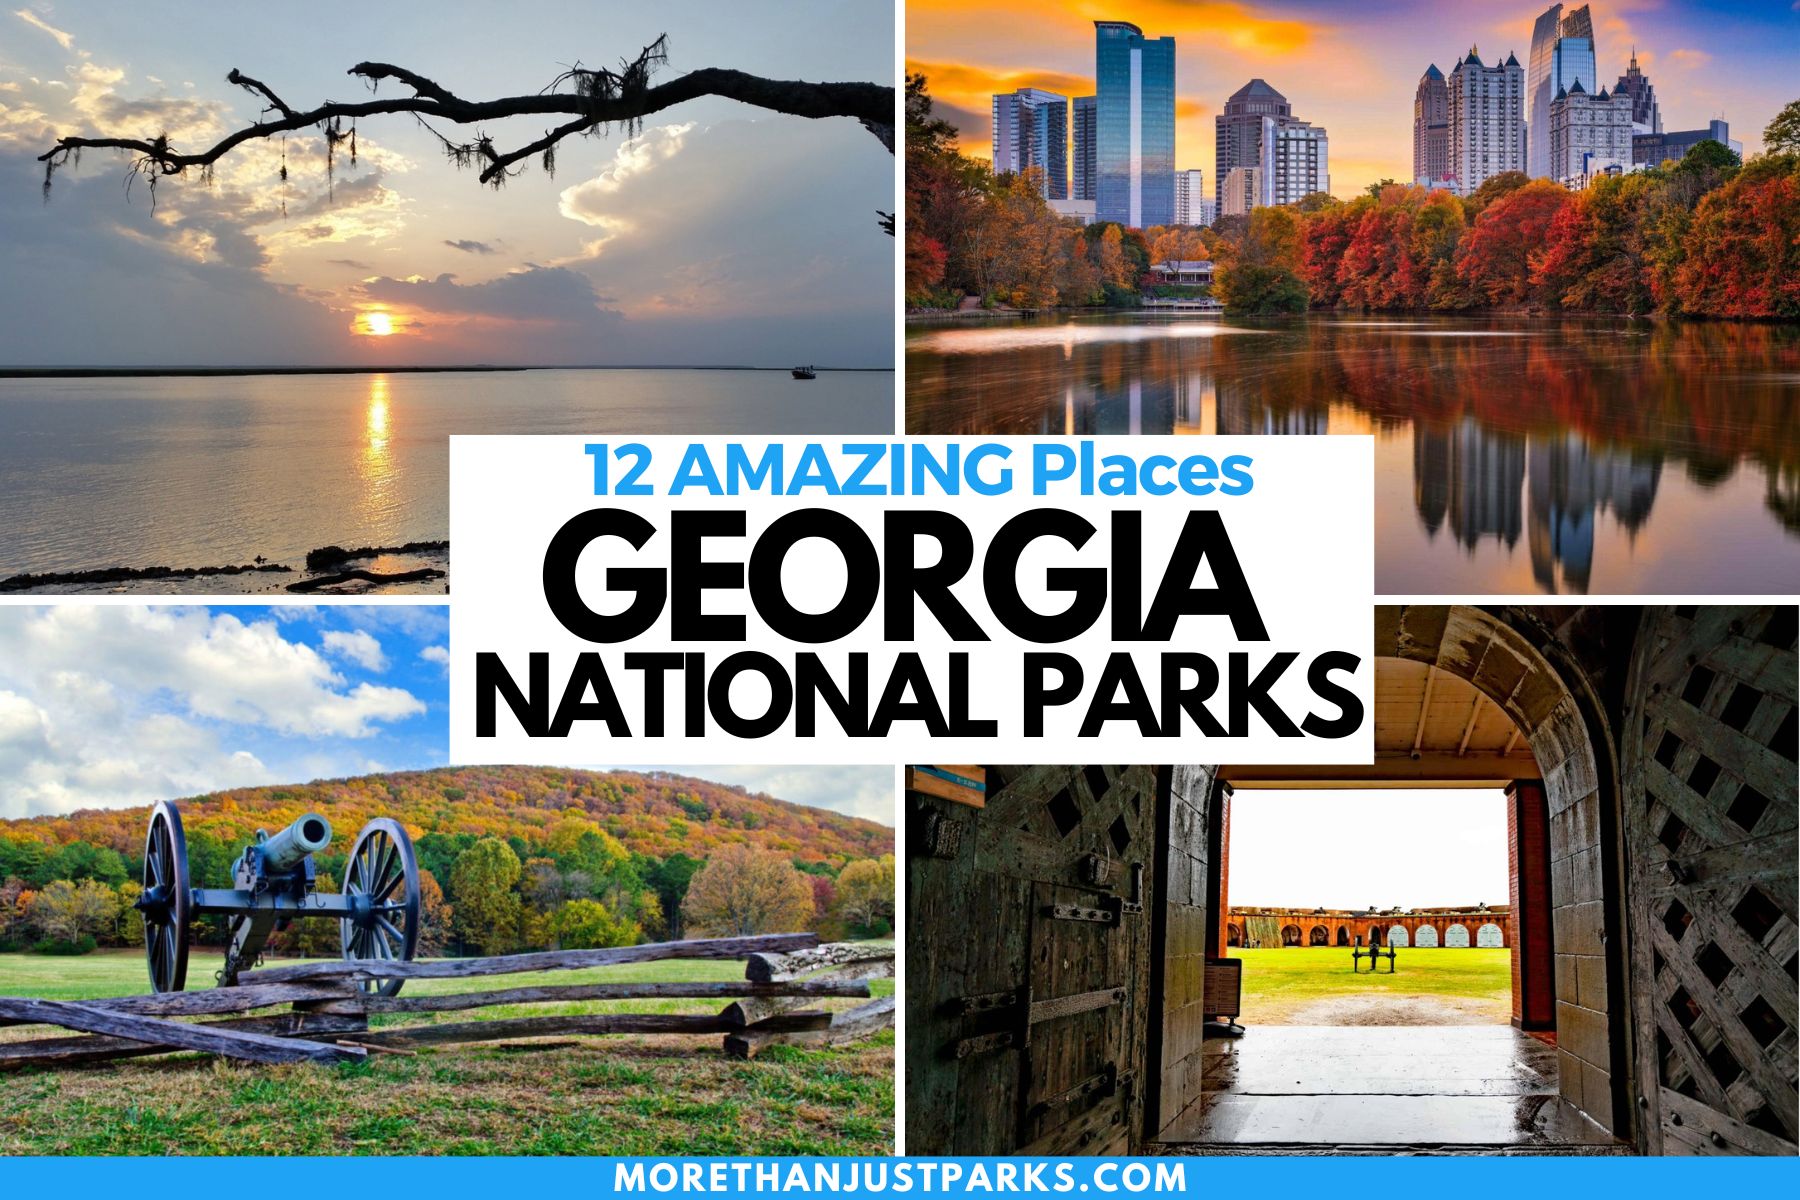 Georgia National Parks Graphic